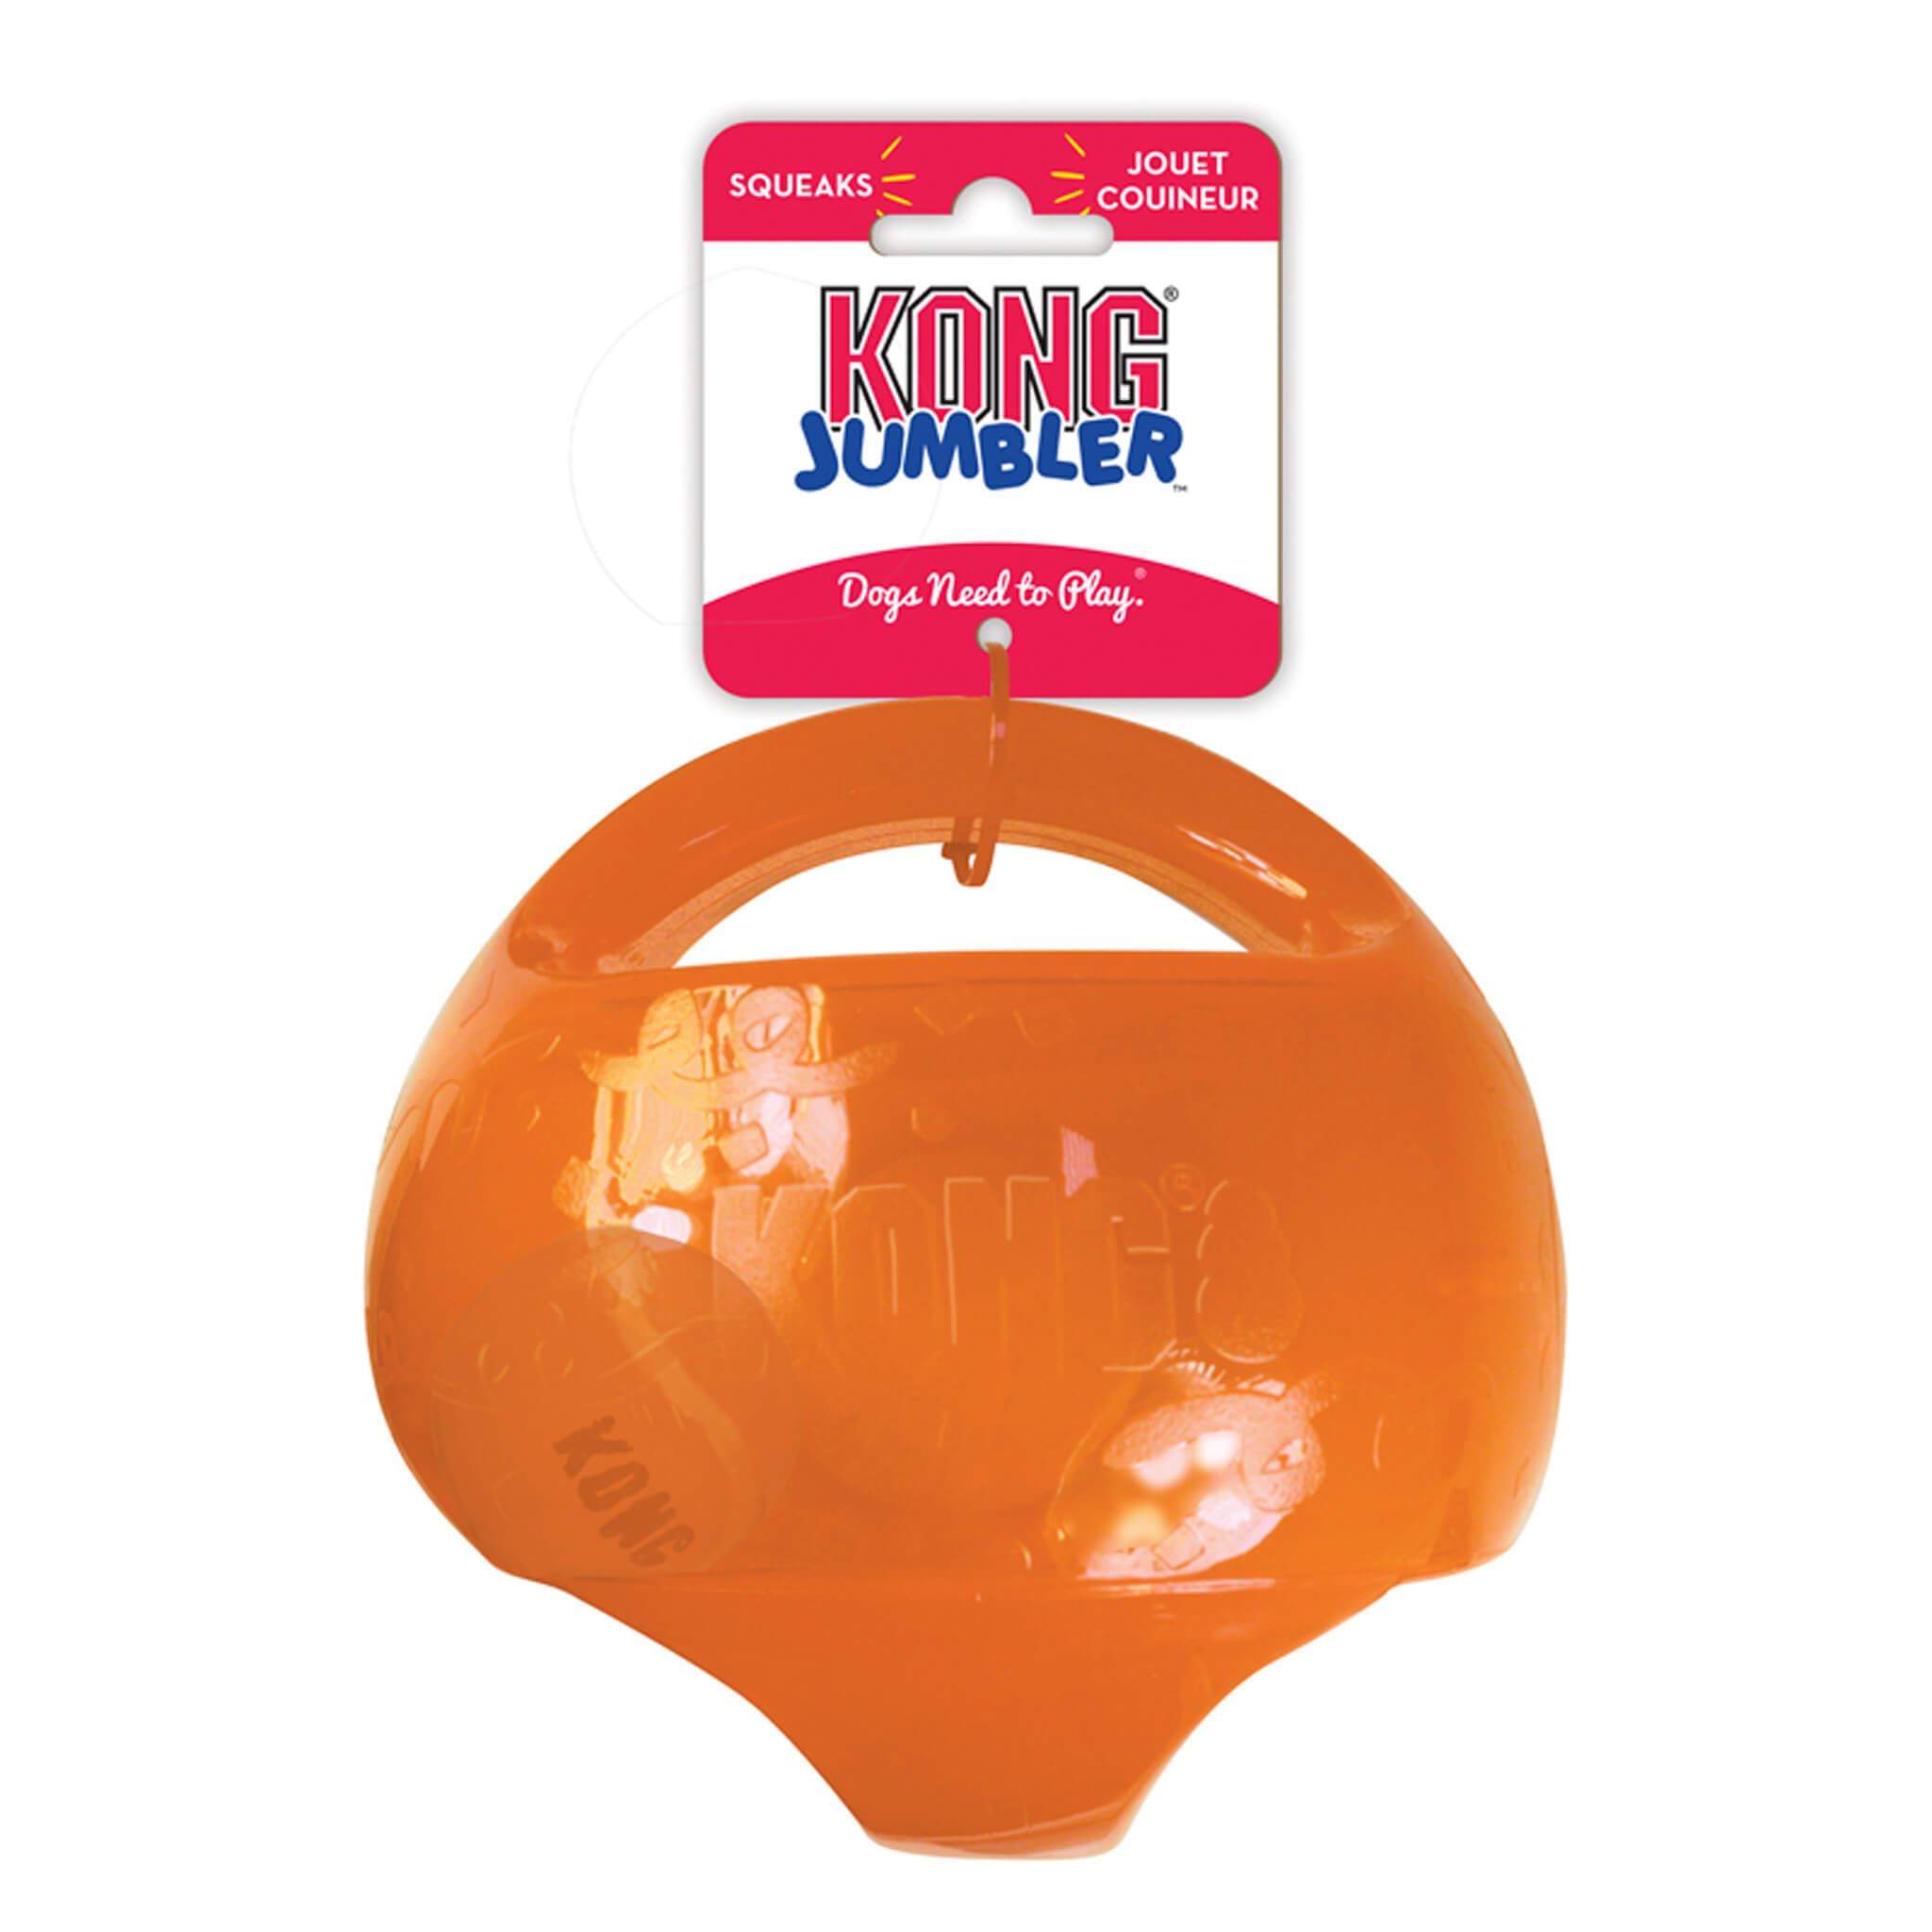 Kong dog toy - jumbler ball assorted